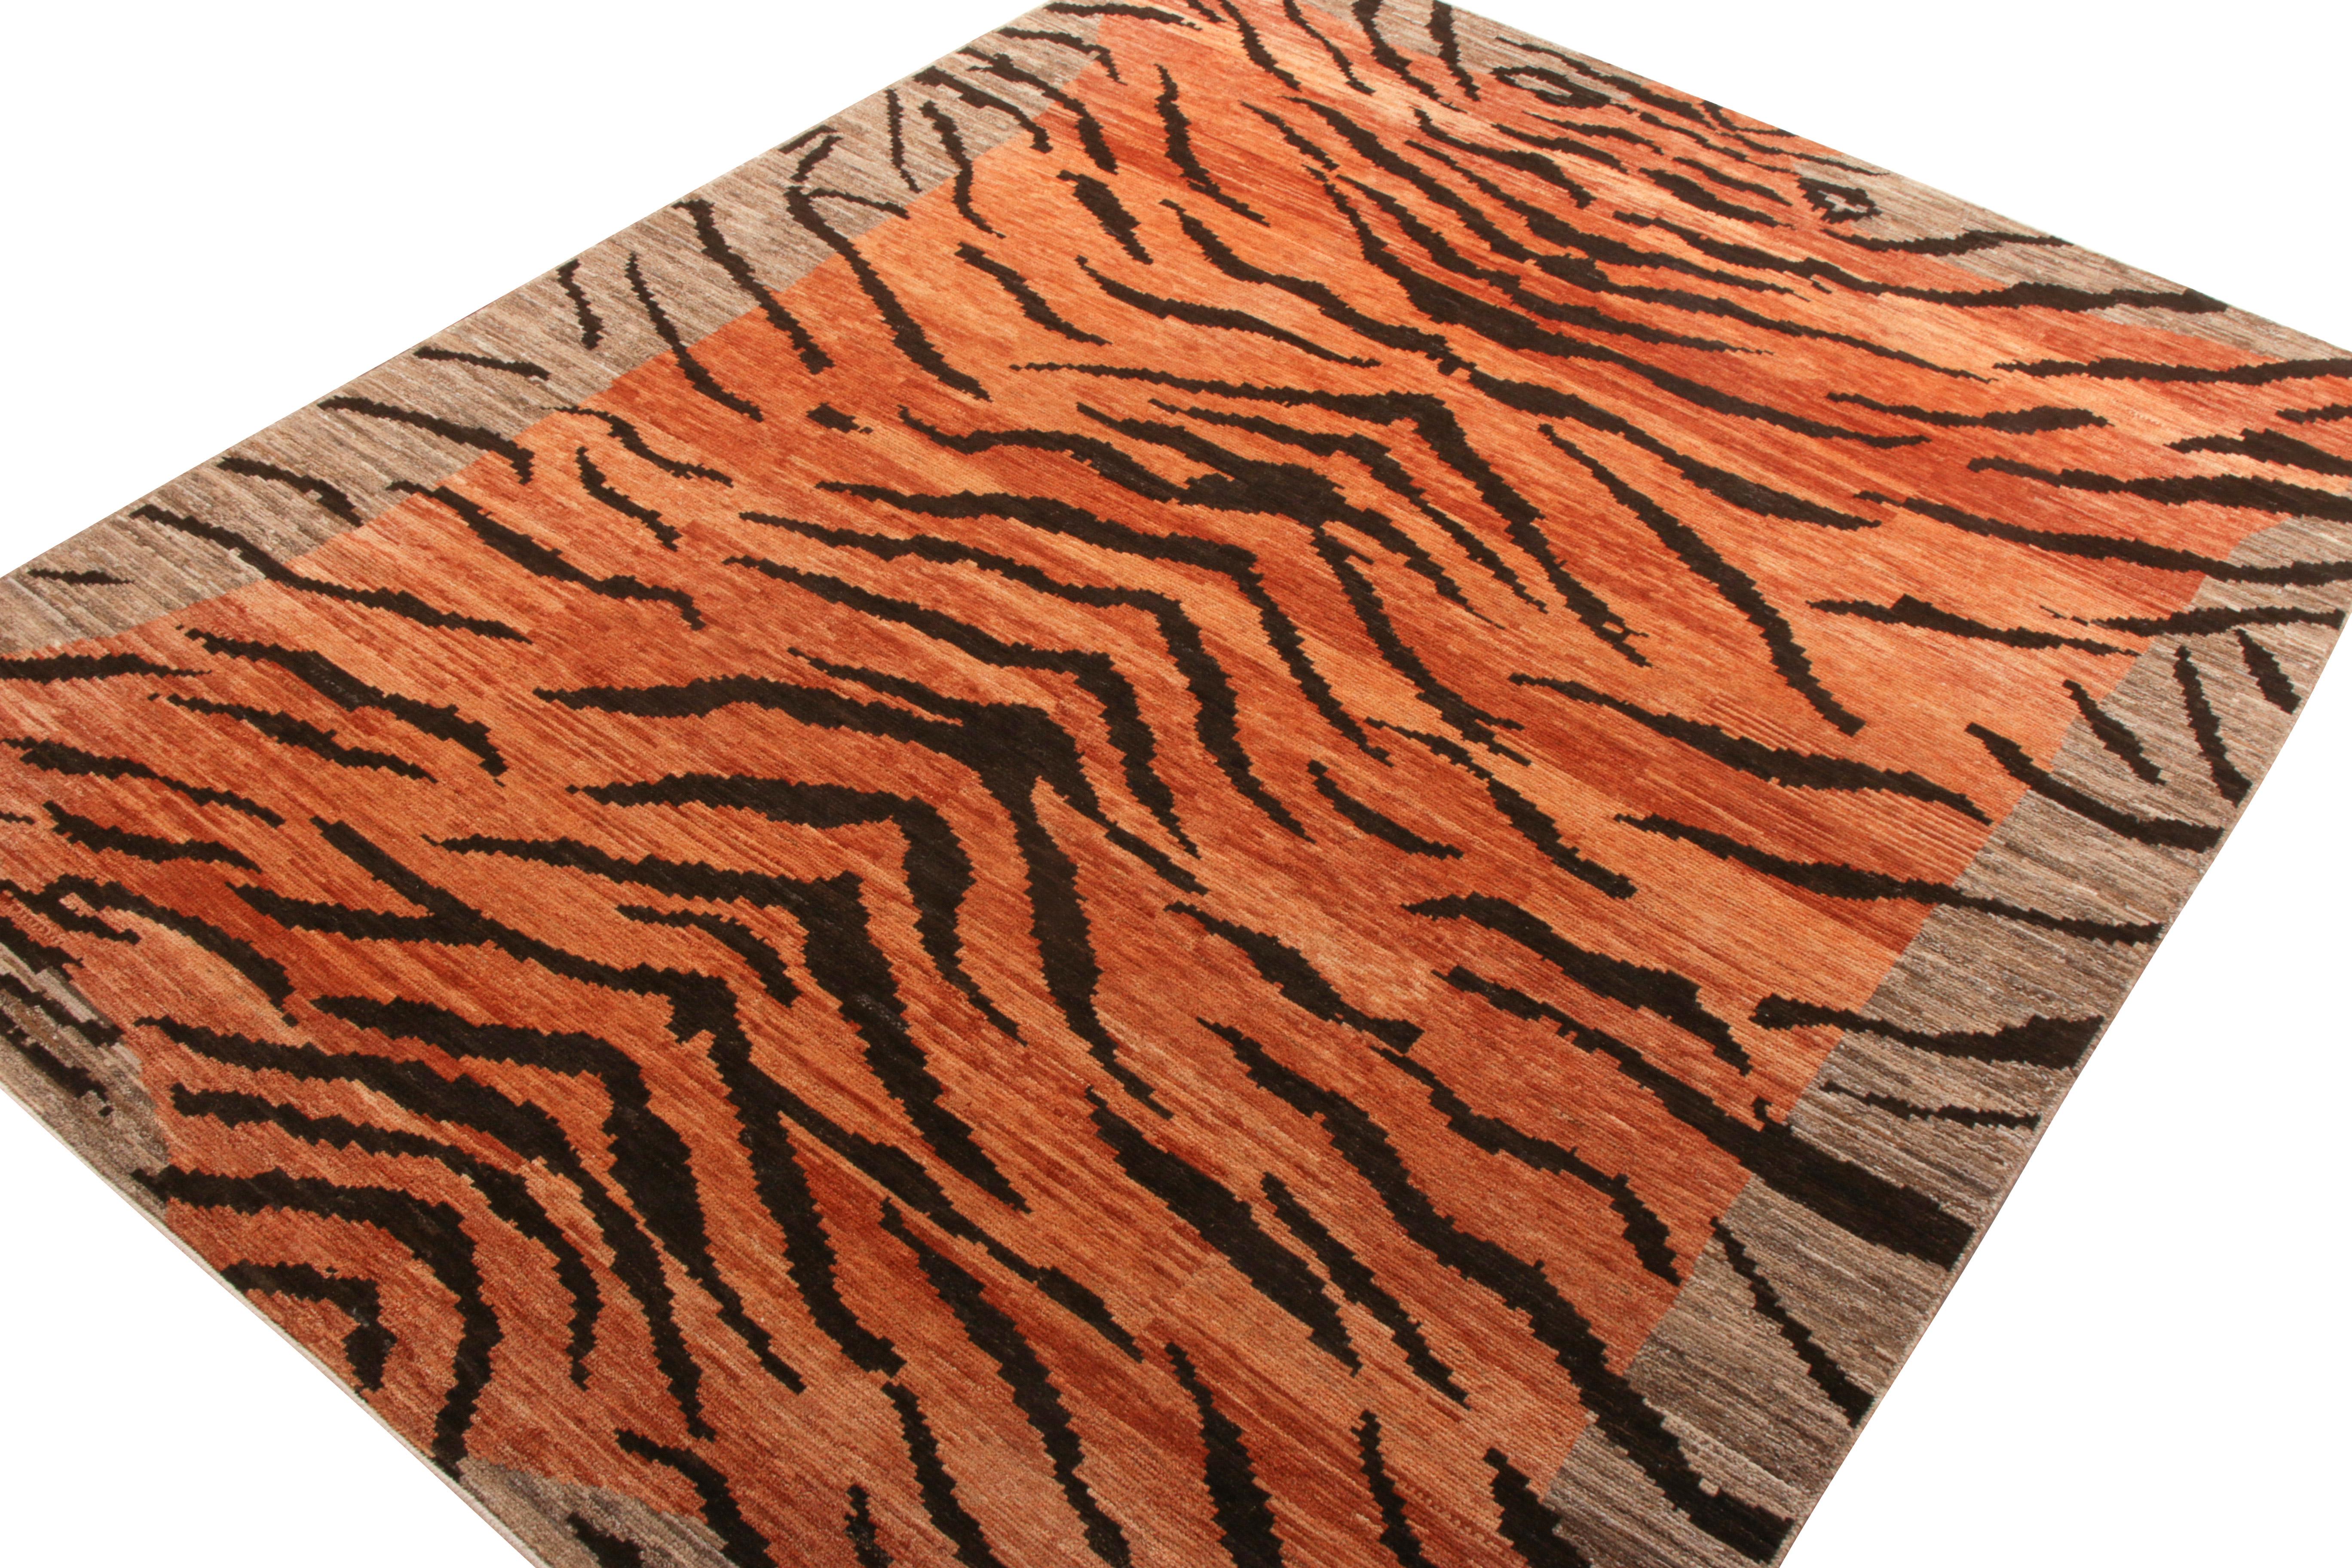 Tribal Rug & Kilim’s Tiger Rug in Orange, Beige-Brown and Black Pelt Pattern For Sale